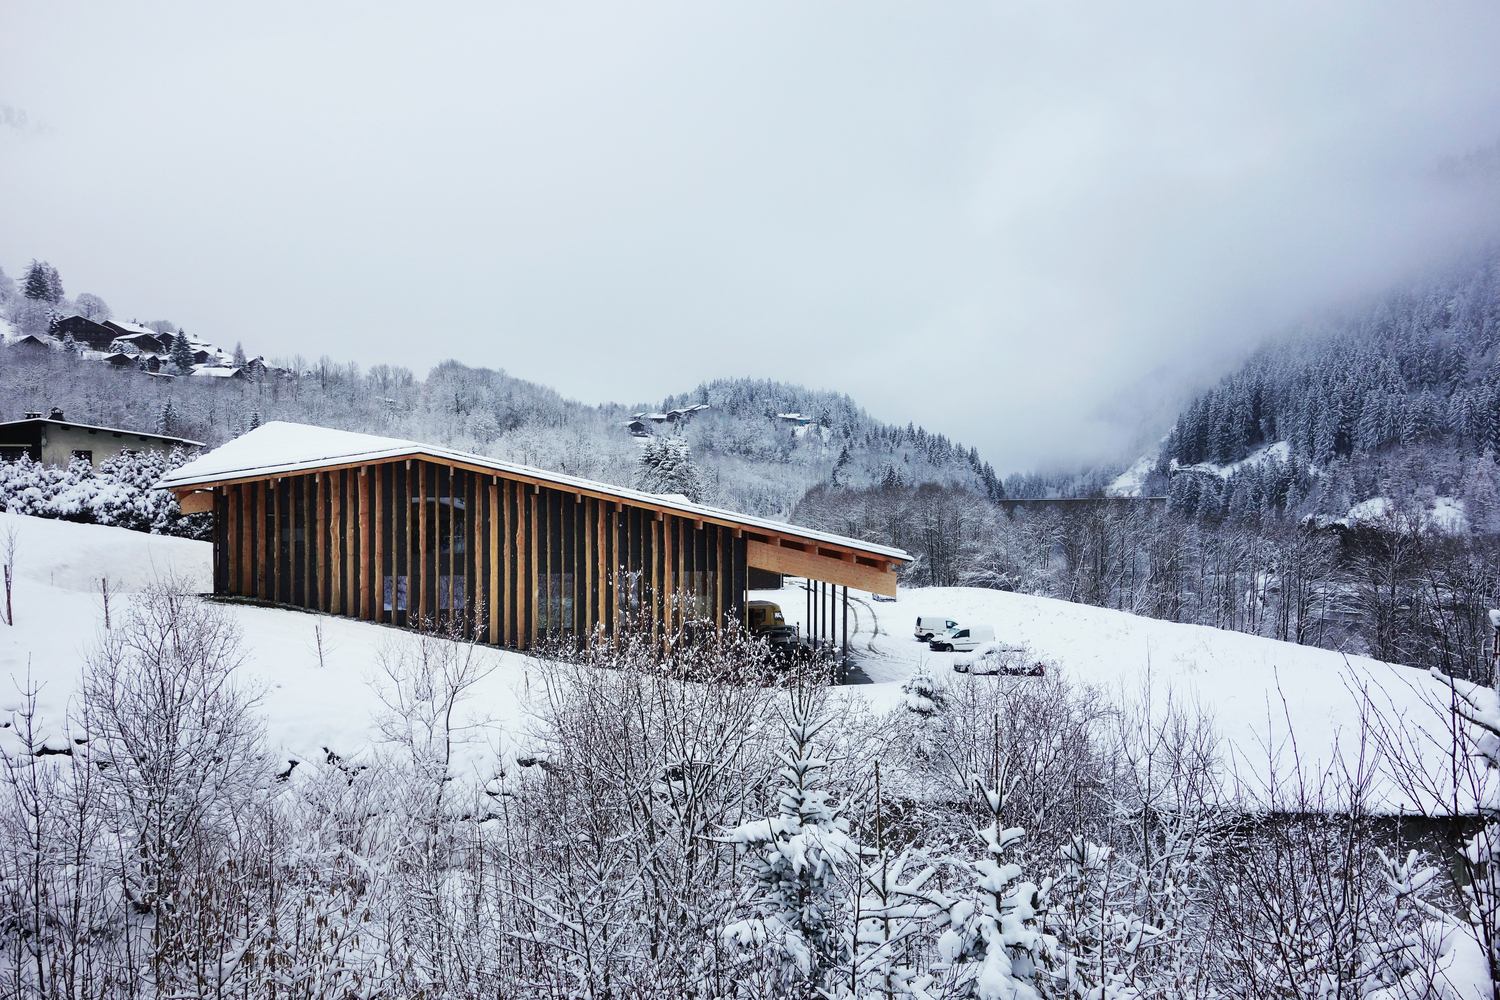 Mont-Blanc Base Camp by Kengo Kuma & Associates